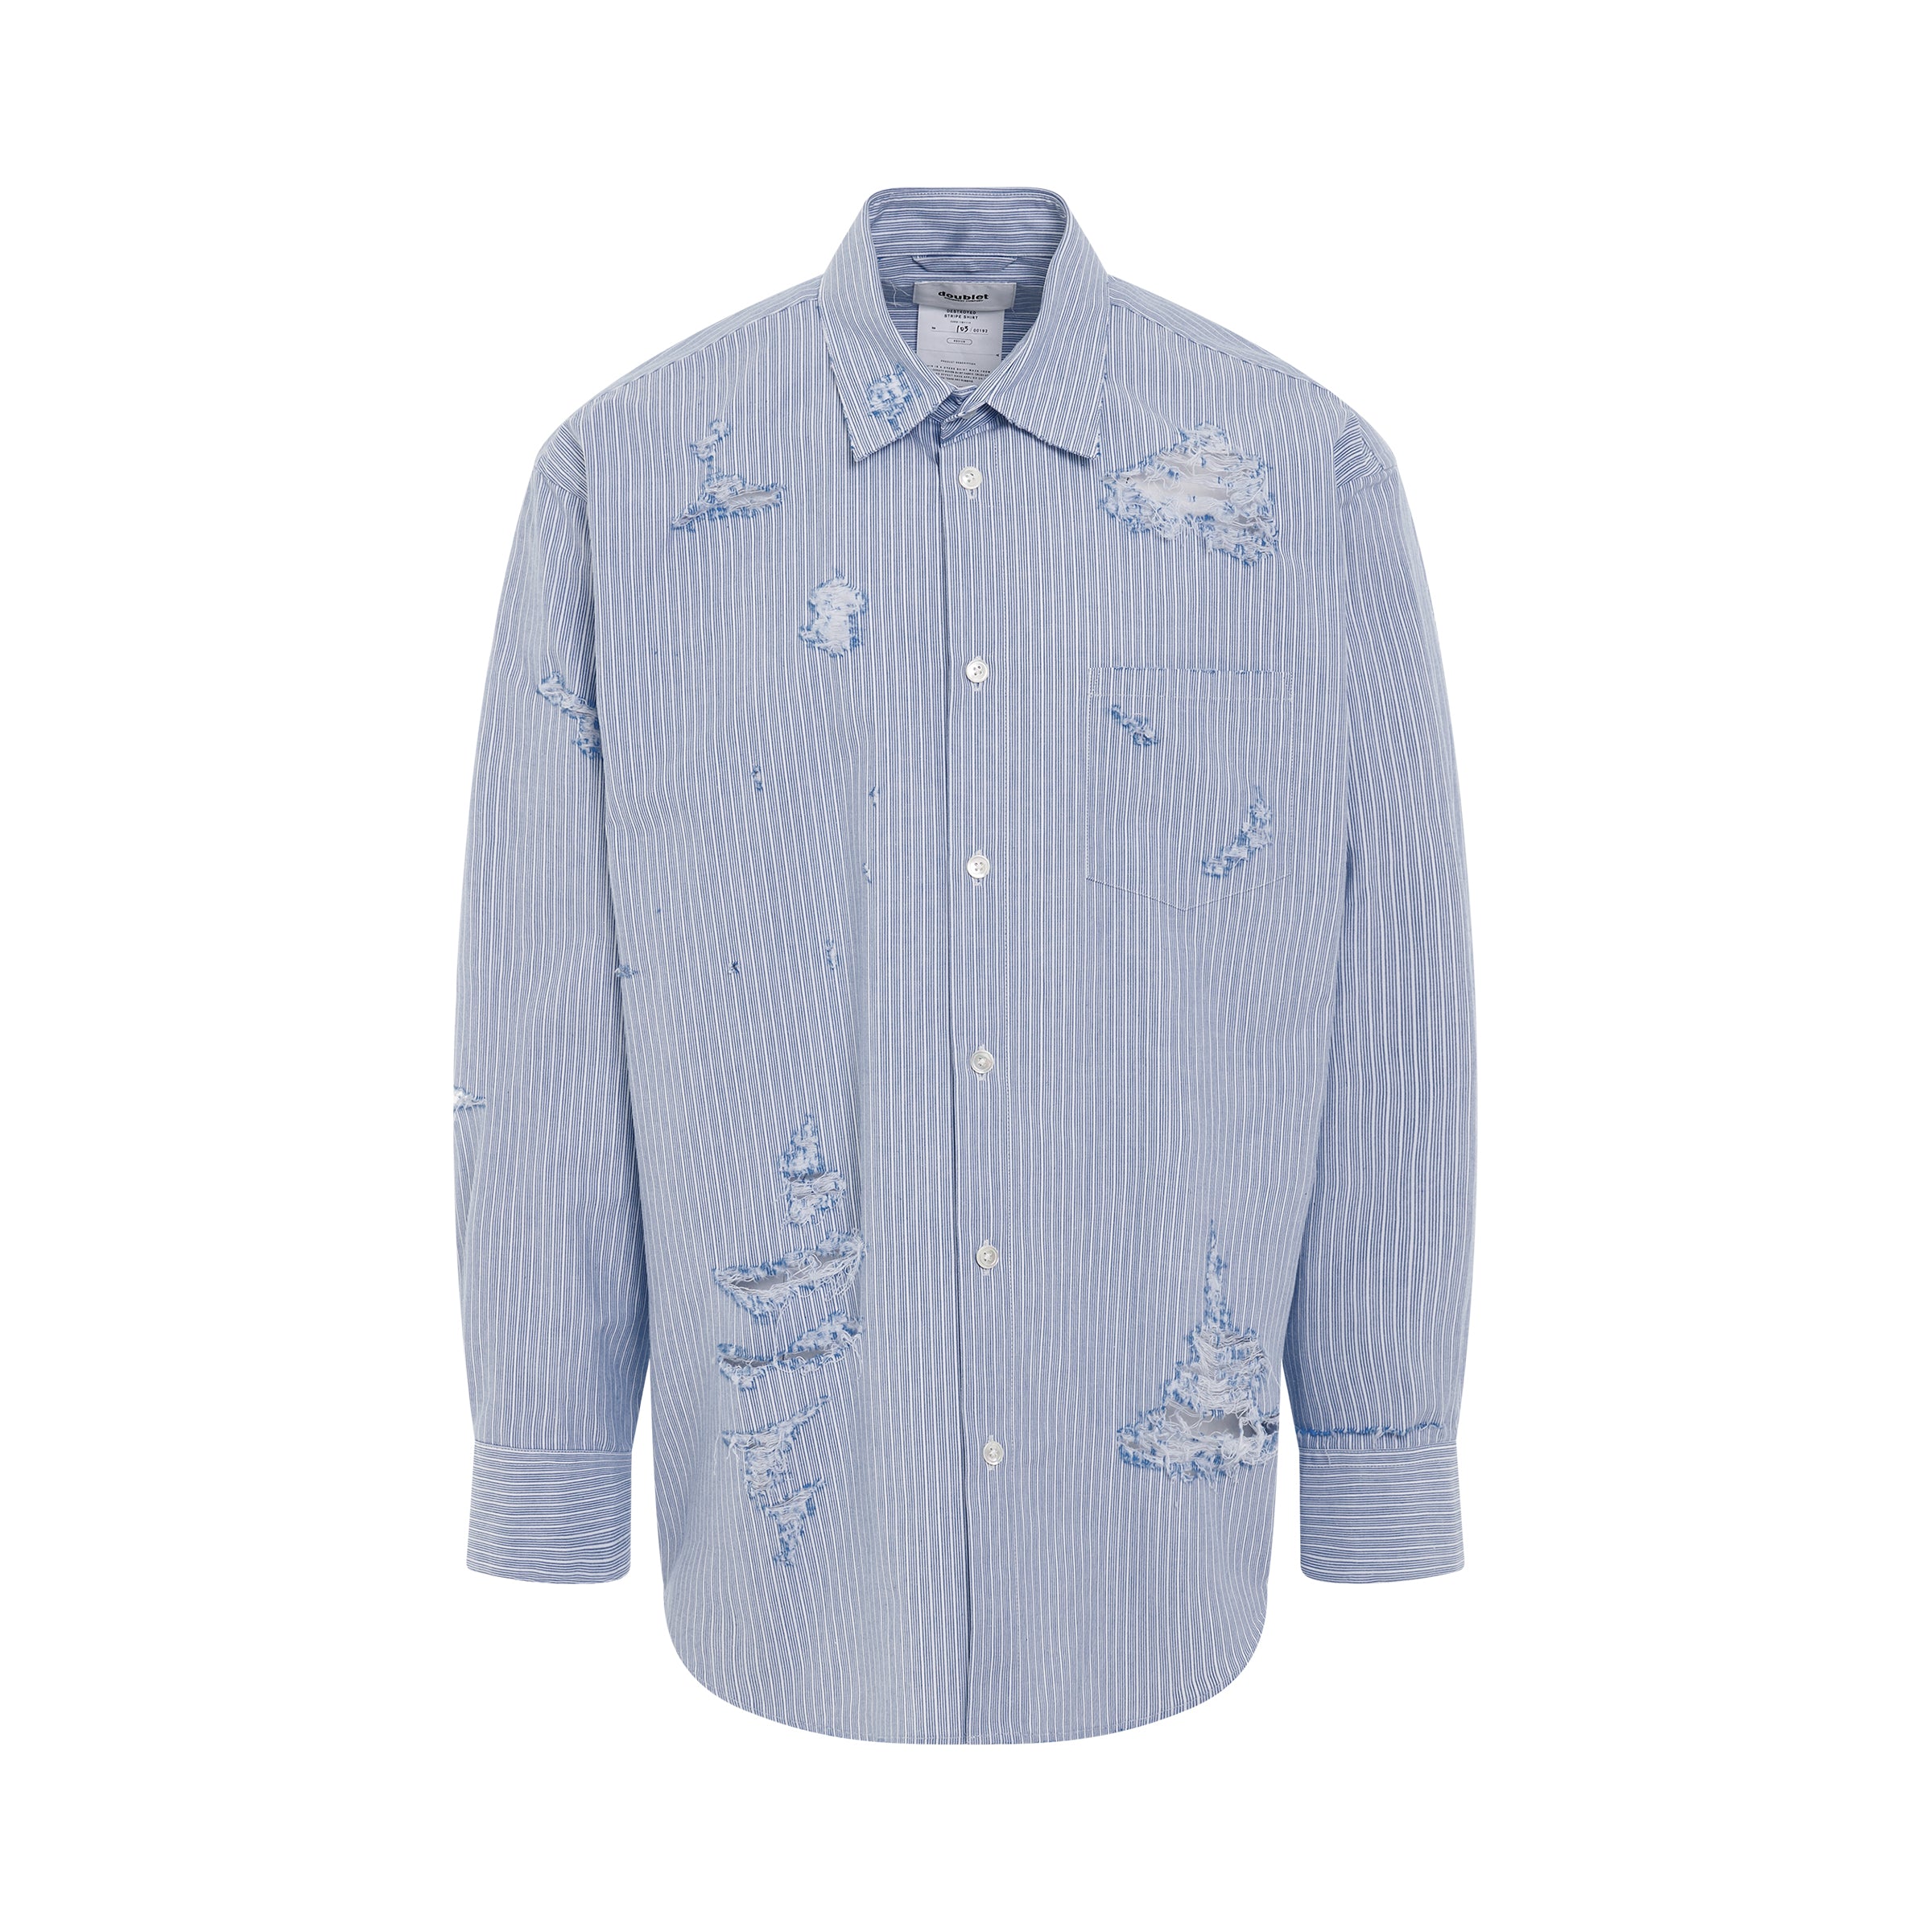 DOUBLET Destroyed Stripe Shirt in Blue/White – MARAIS